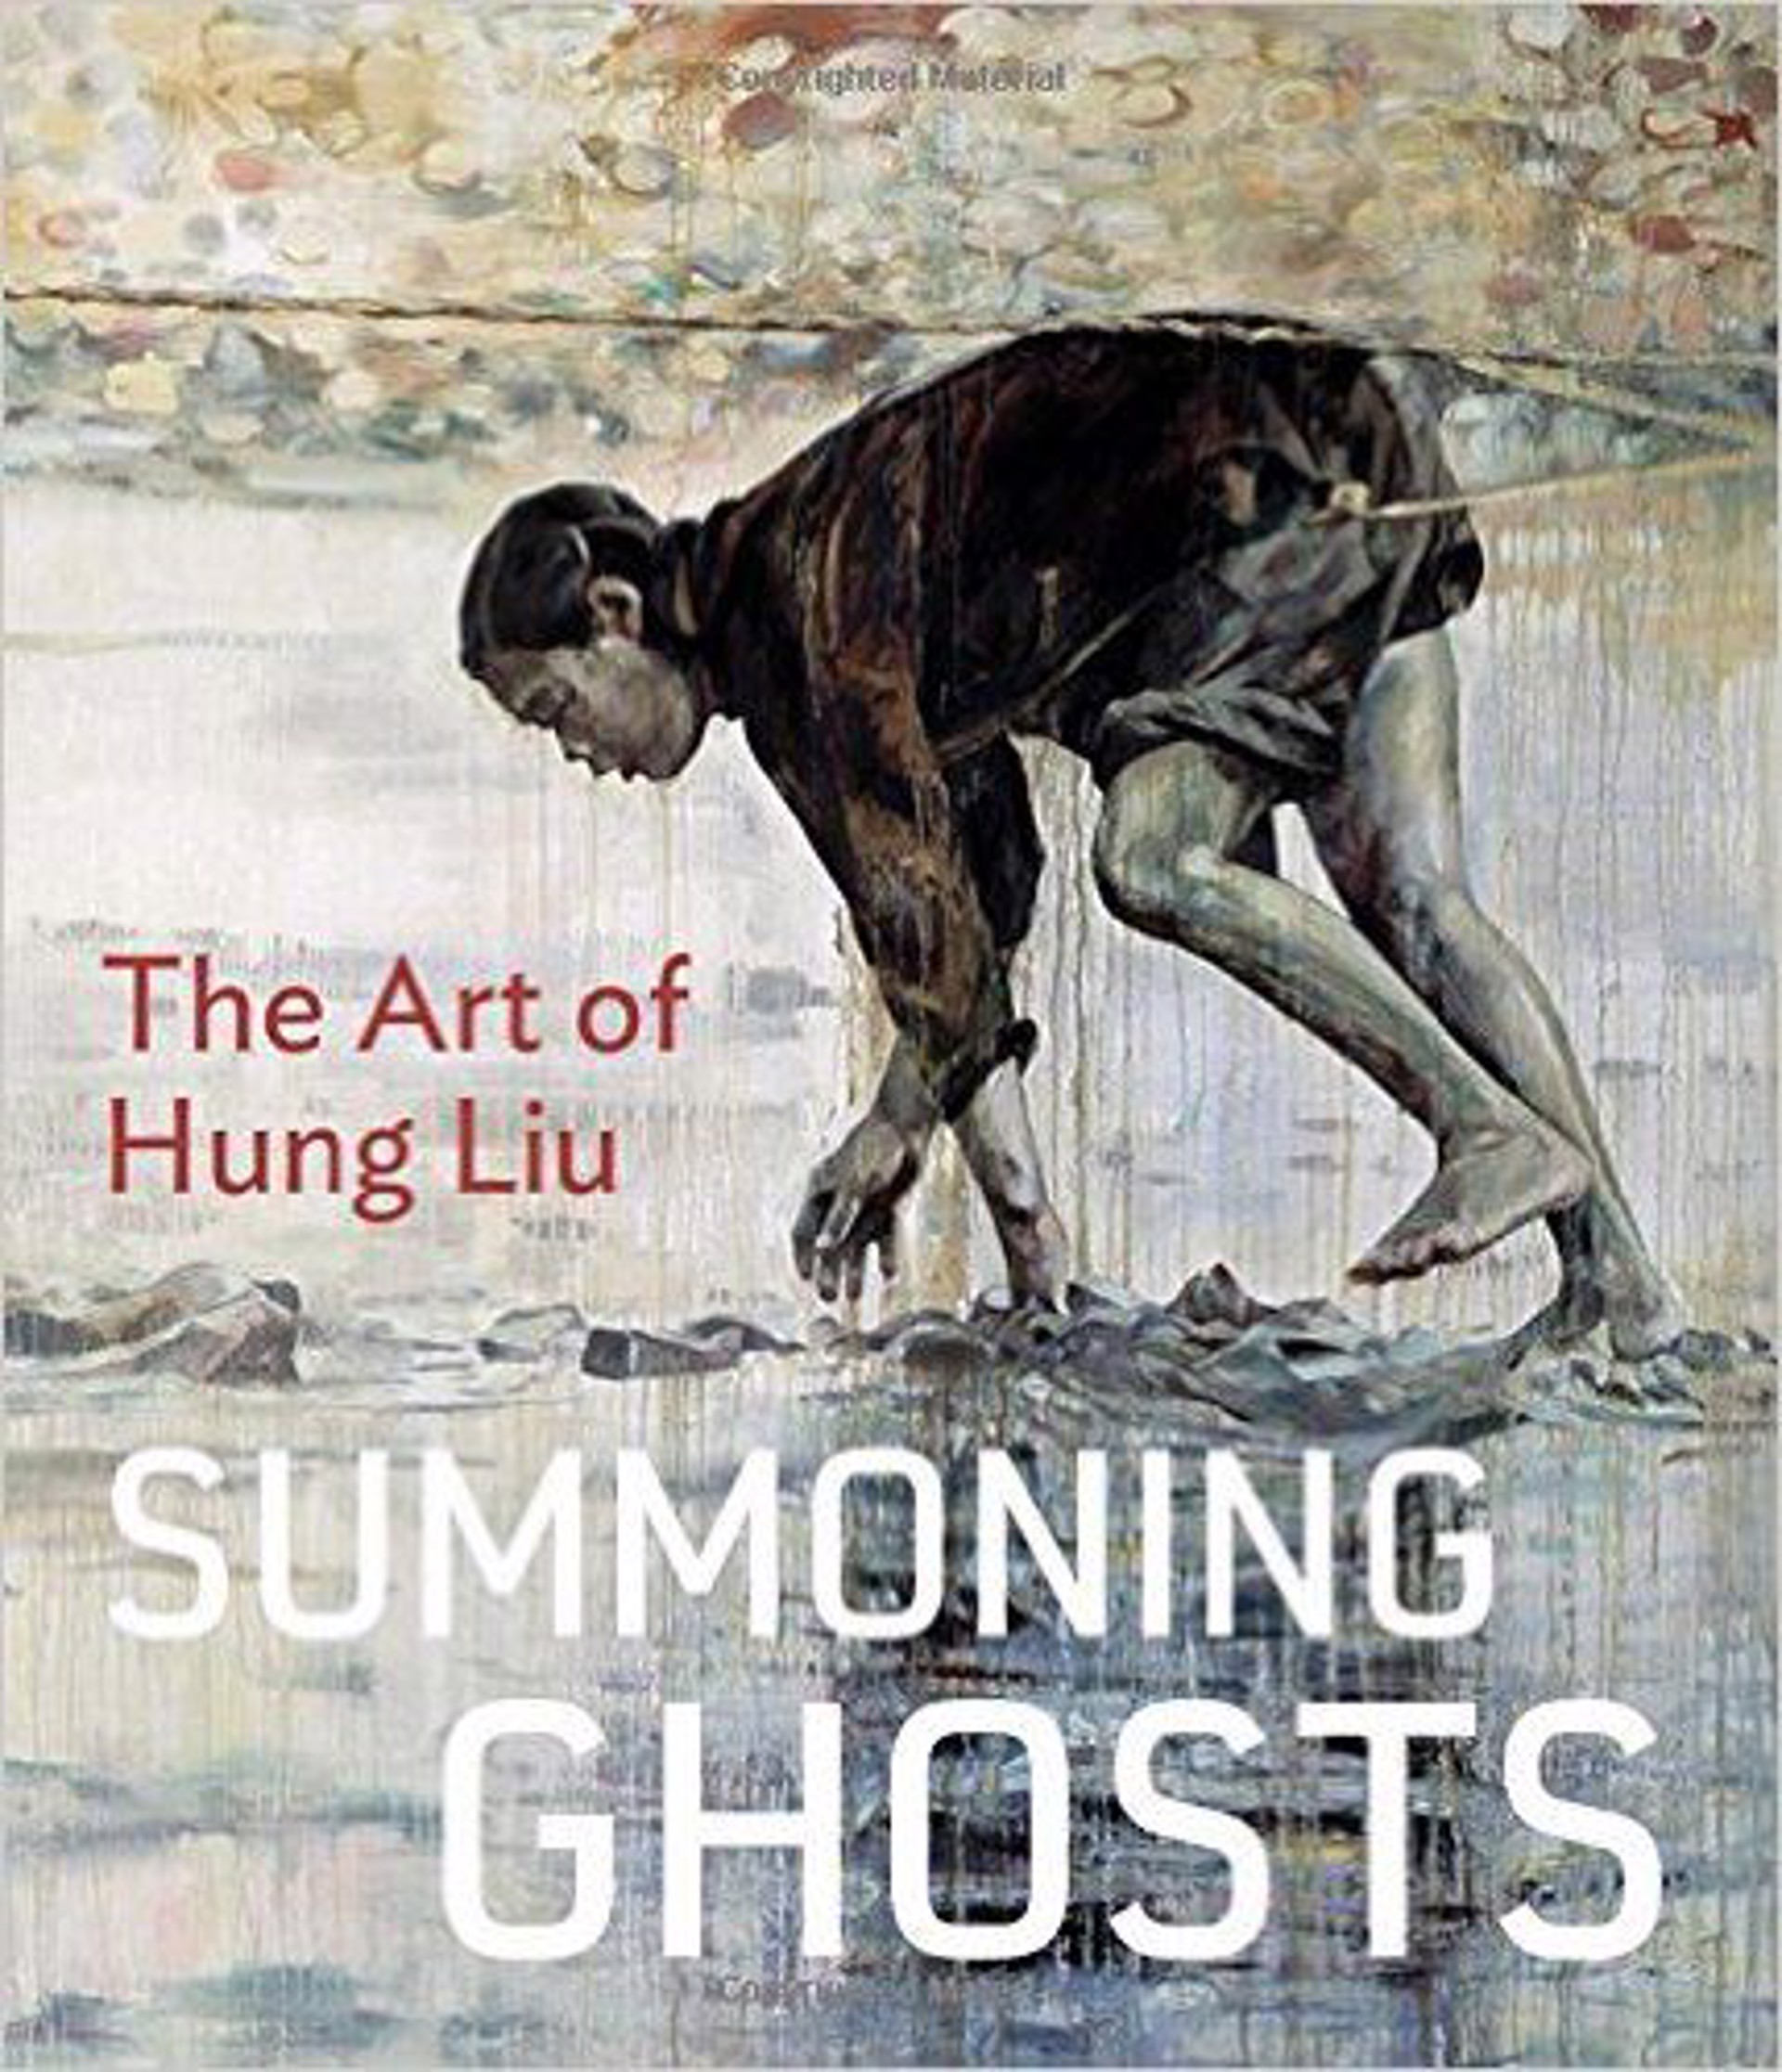 Summoning Ghosts: The Art of Hung Liu by Hung Liu